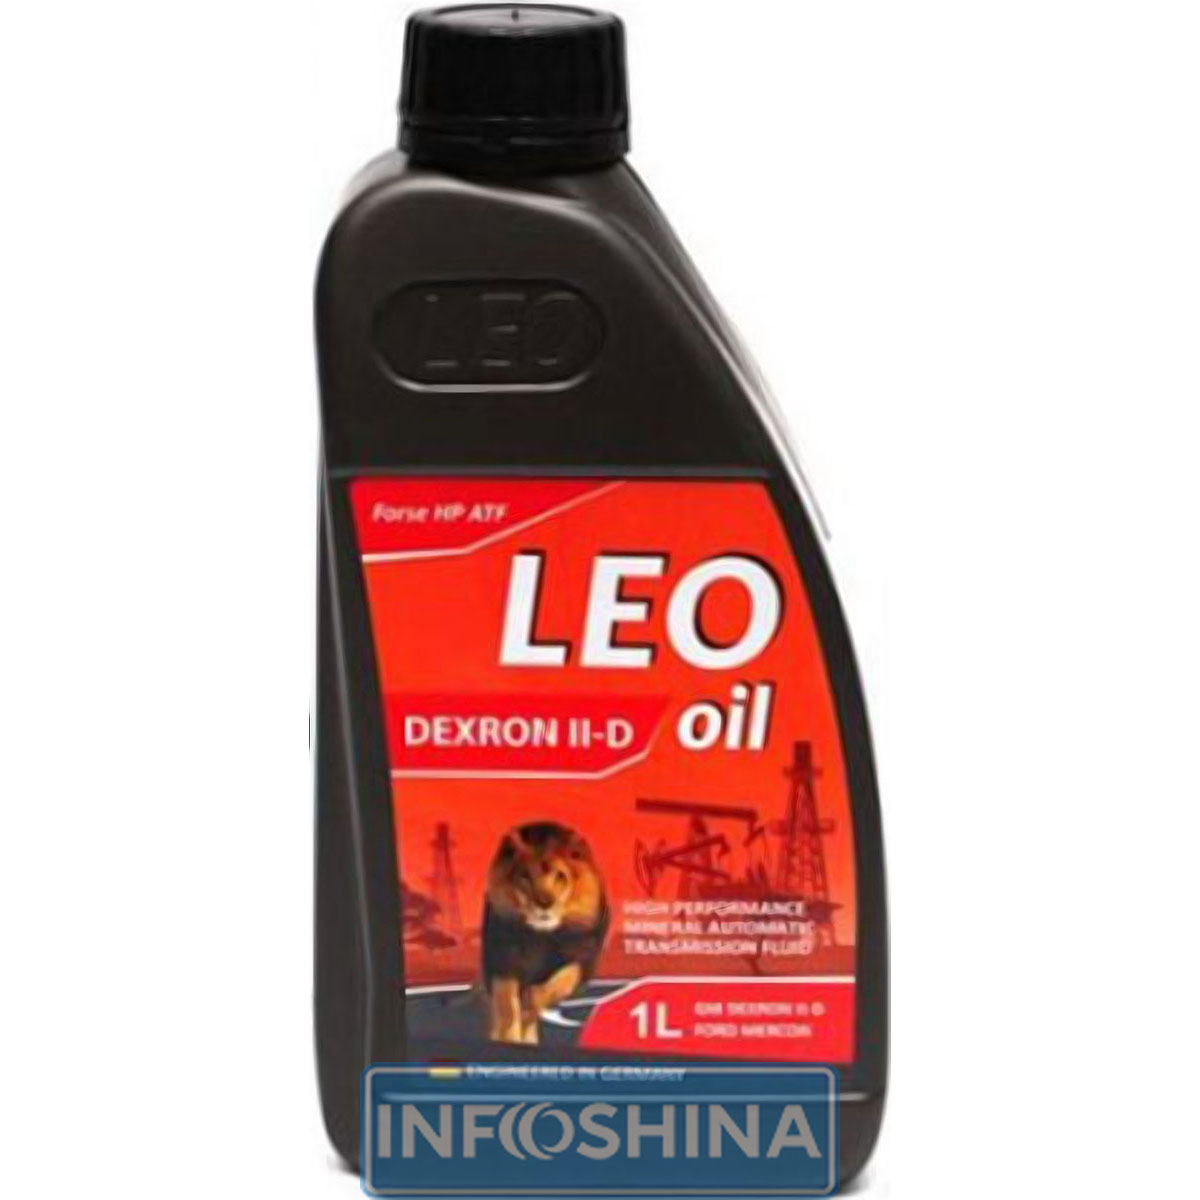 LEO OIL Forse HP ATF DEXRON II-D